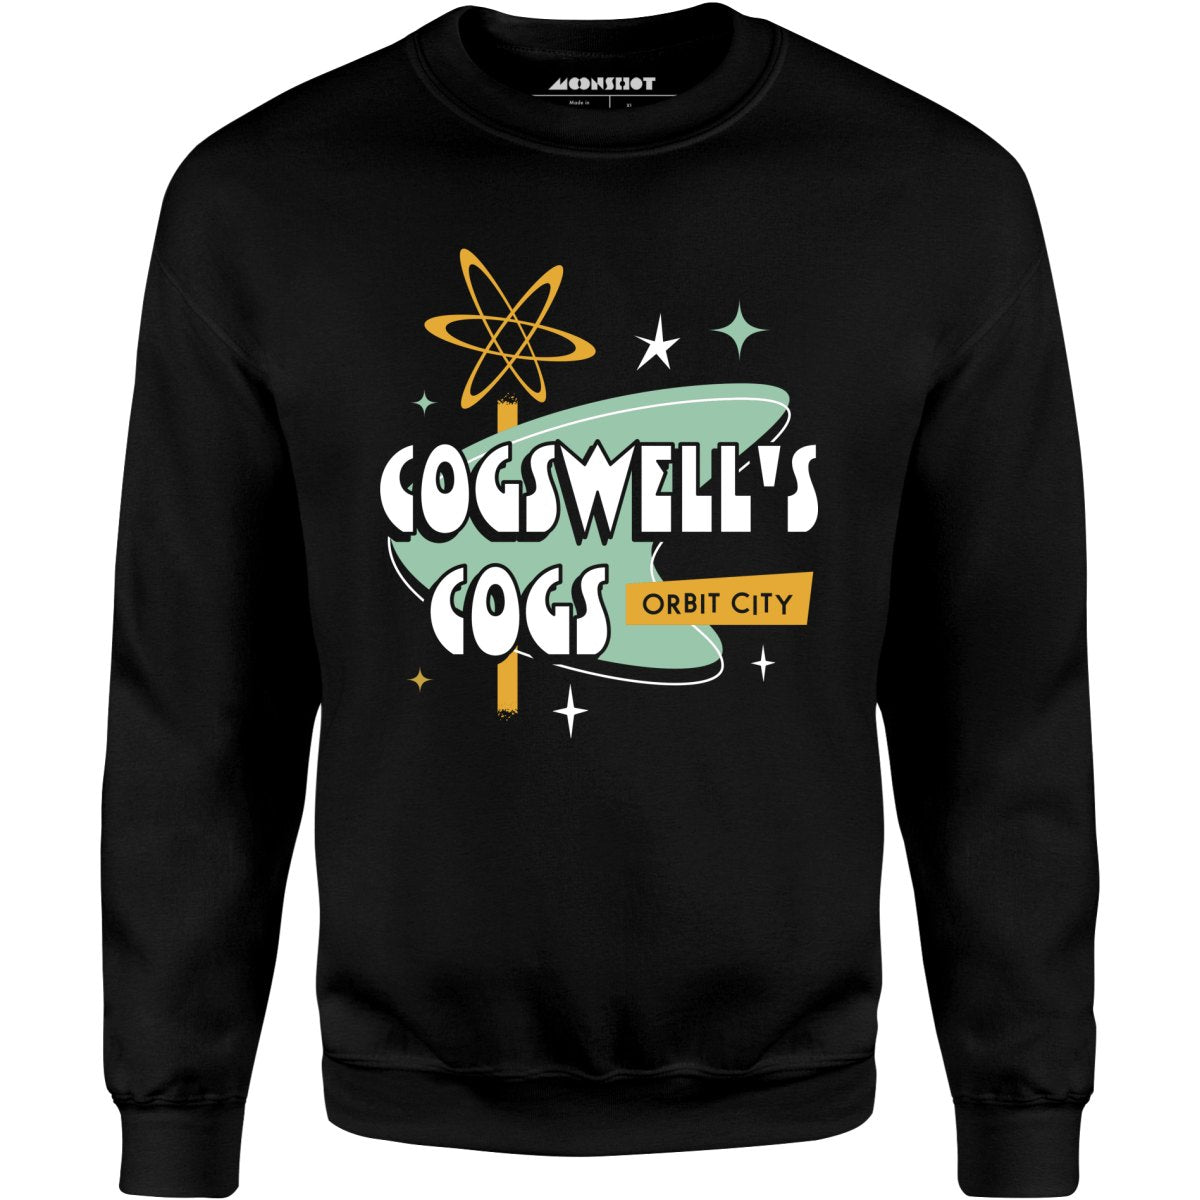 Cogswell's Cogs - Unisex Sweatshirt